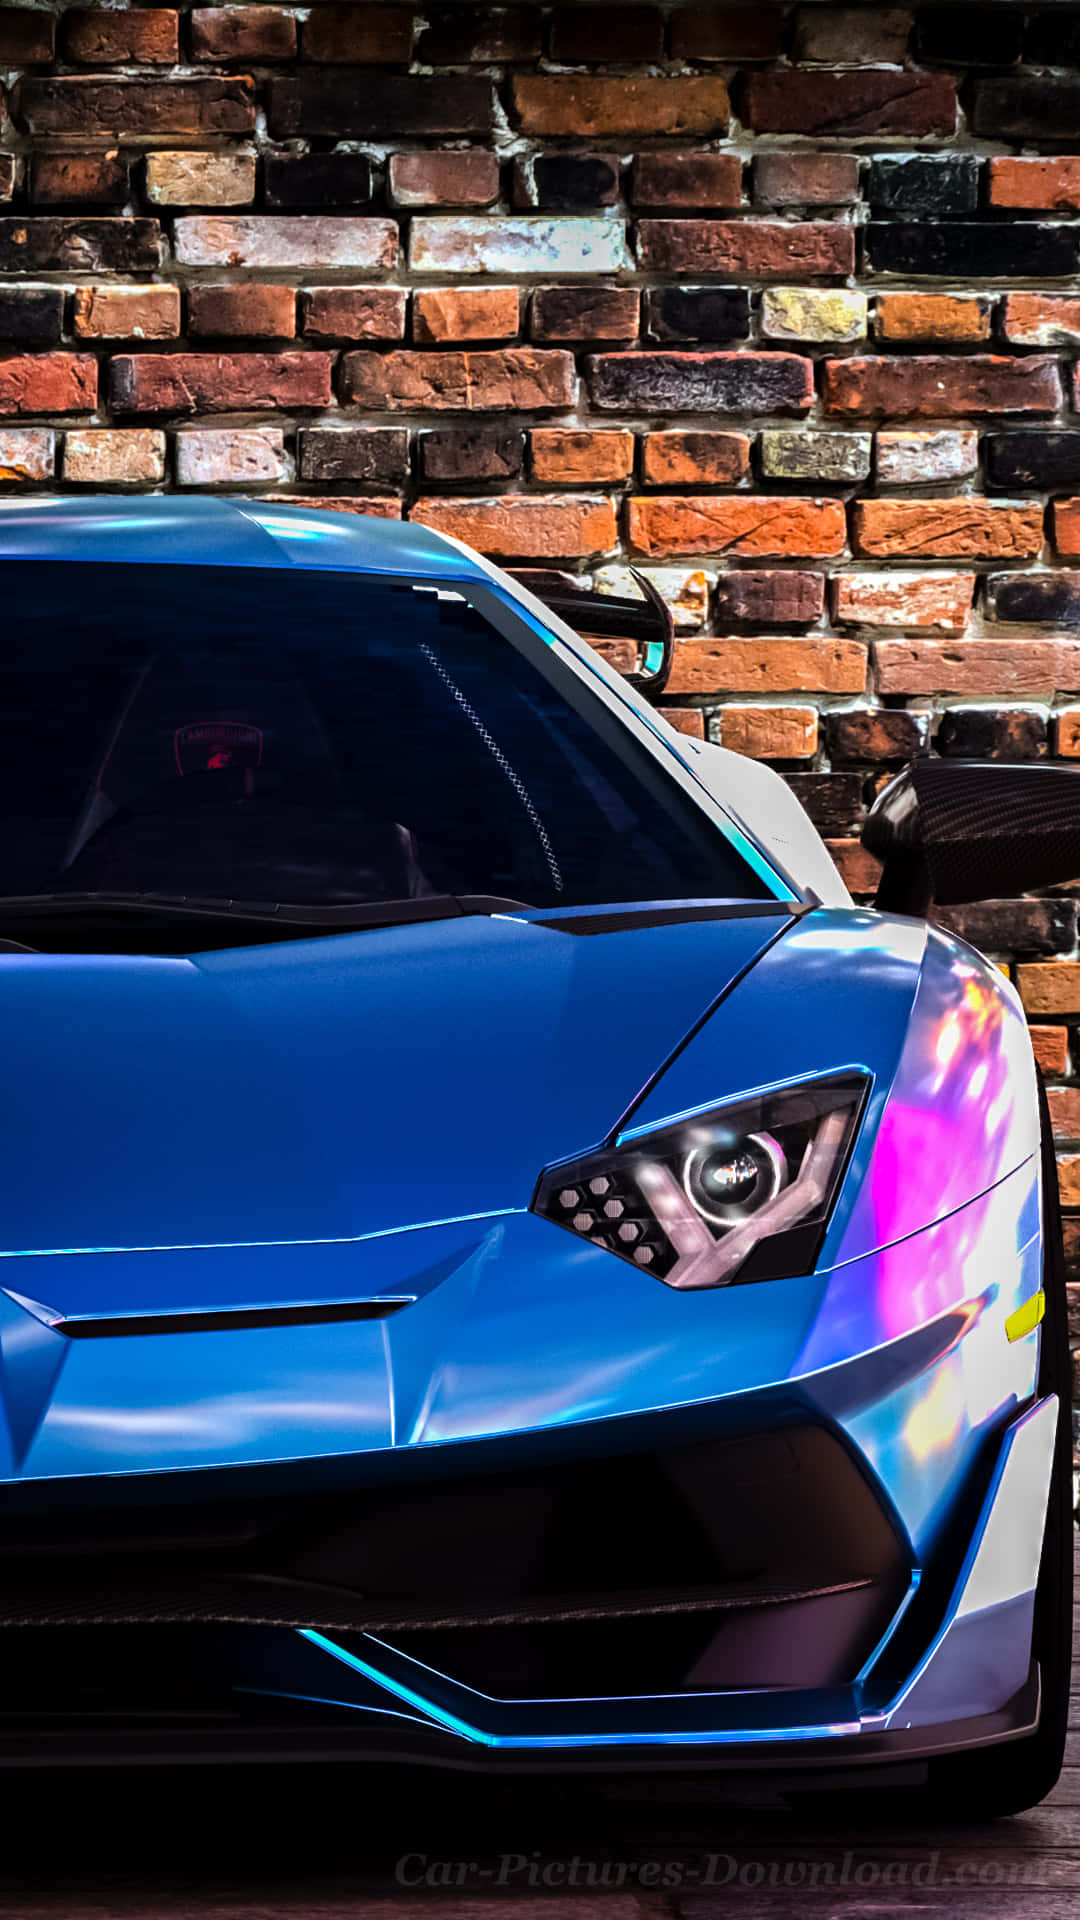 Get the Look - Indulge in the Luxurious Blue Lamborghini Wallpaper